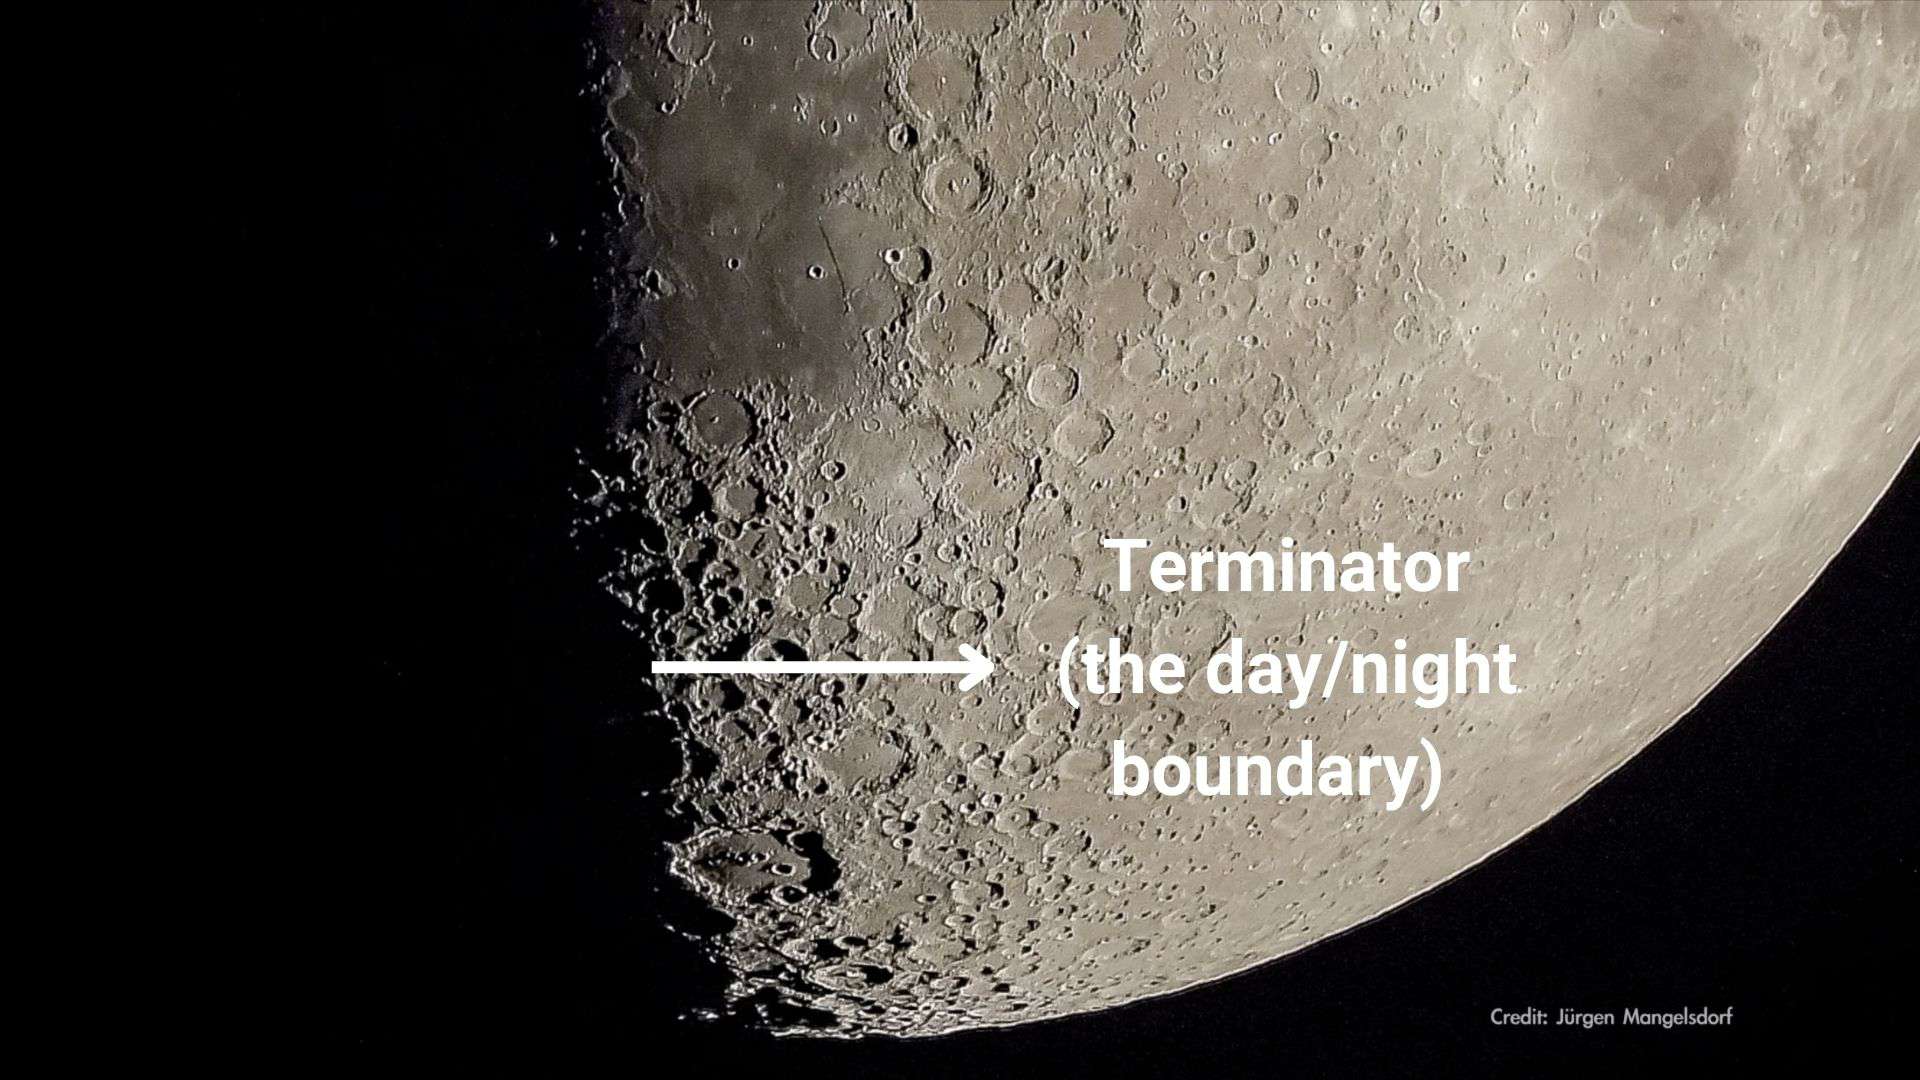 Terminator line on the lunar surface